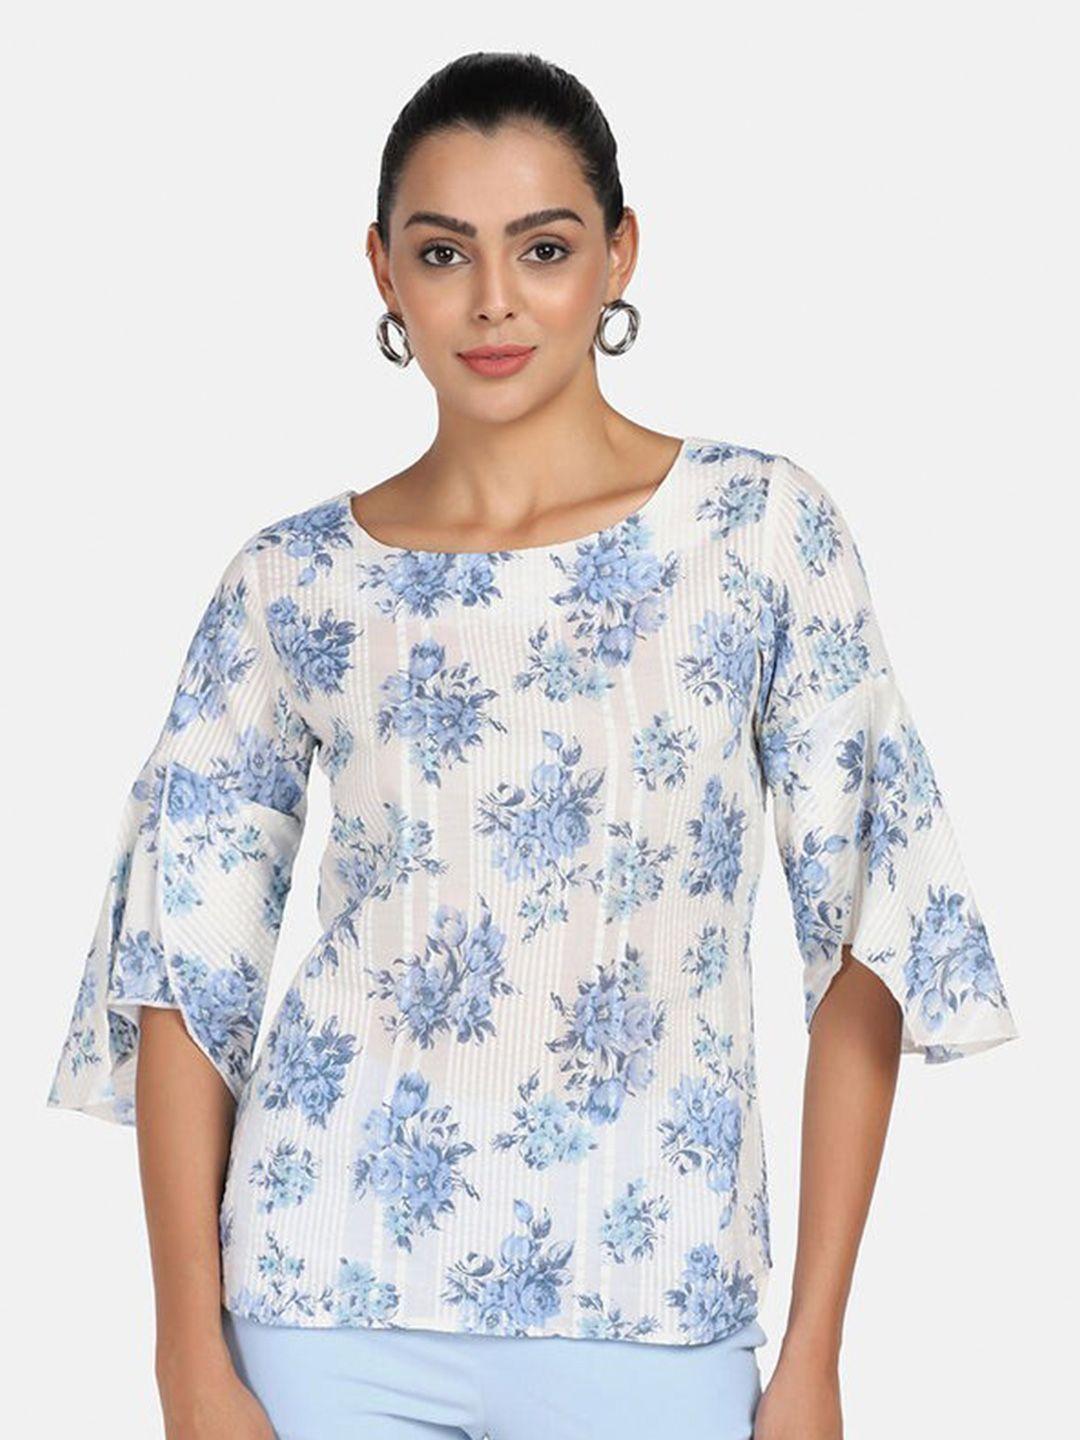 powersutra-blue-&-white-floral-cotton-print-top